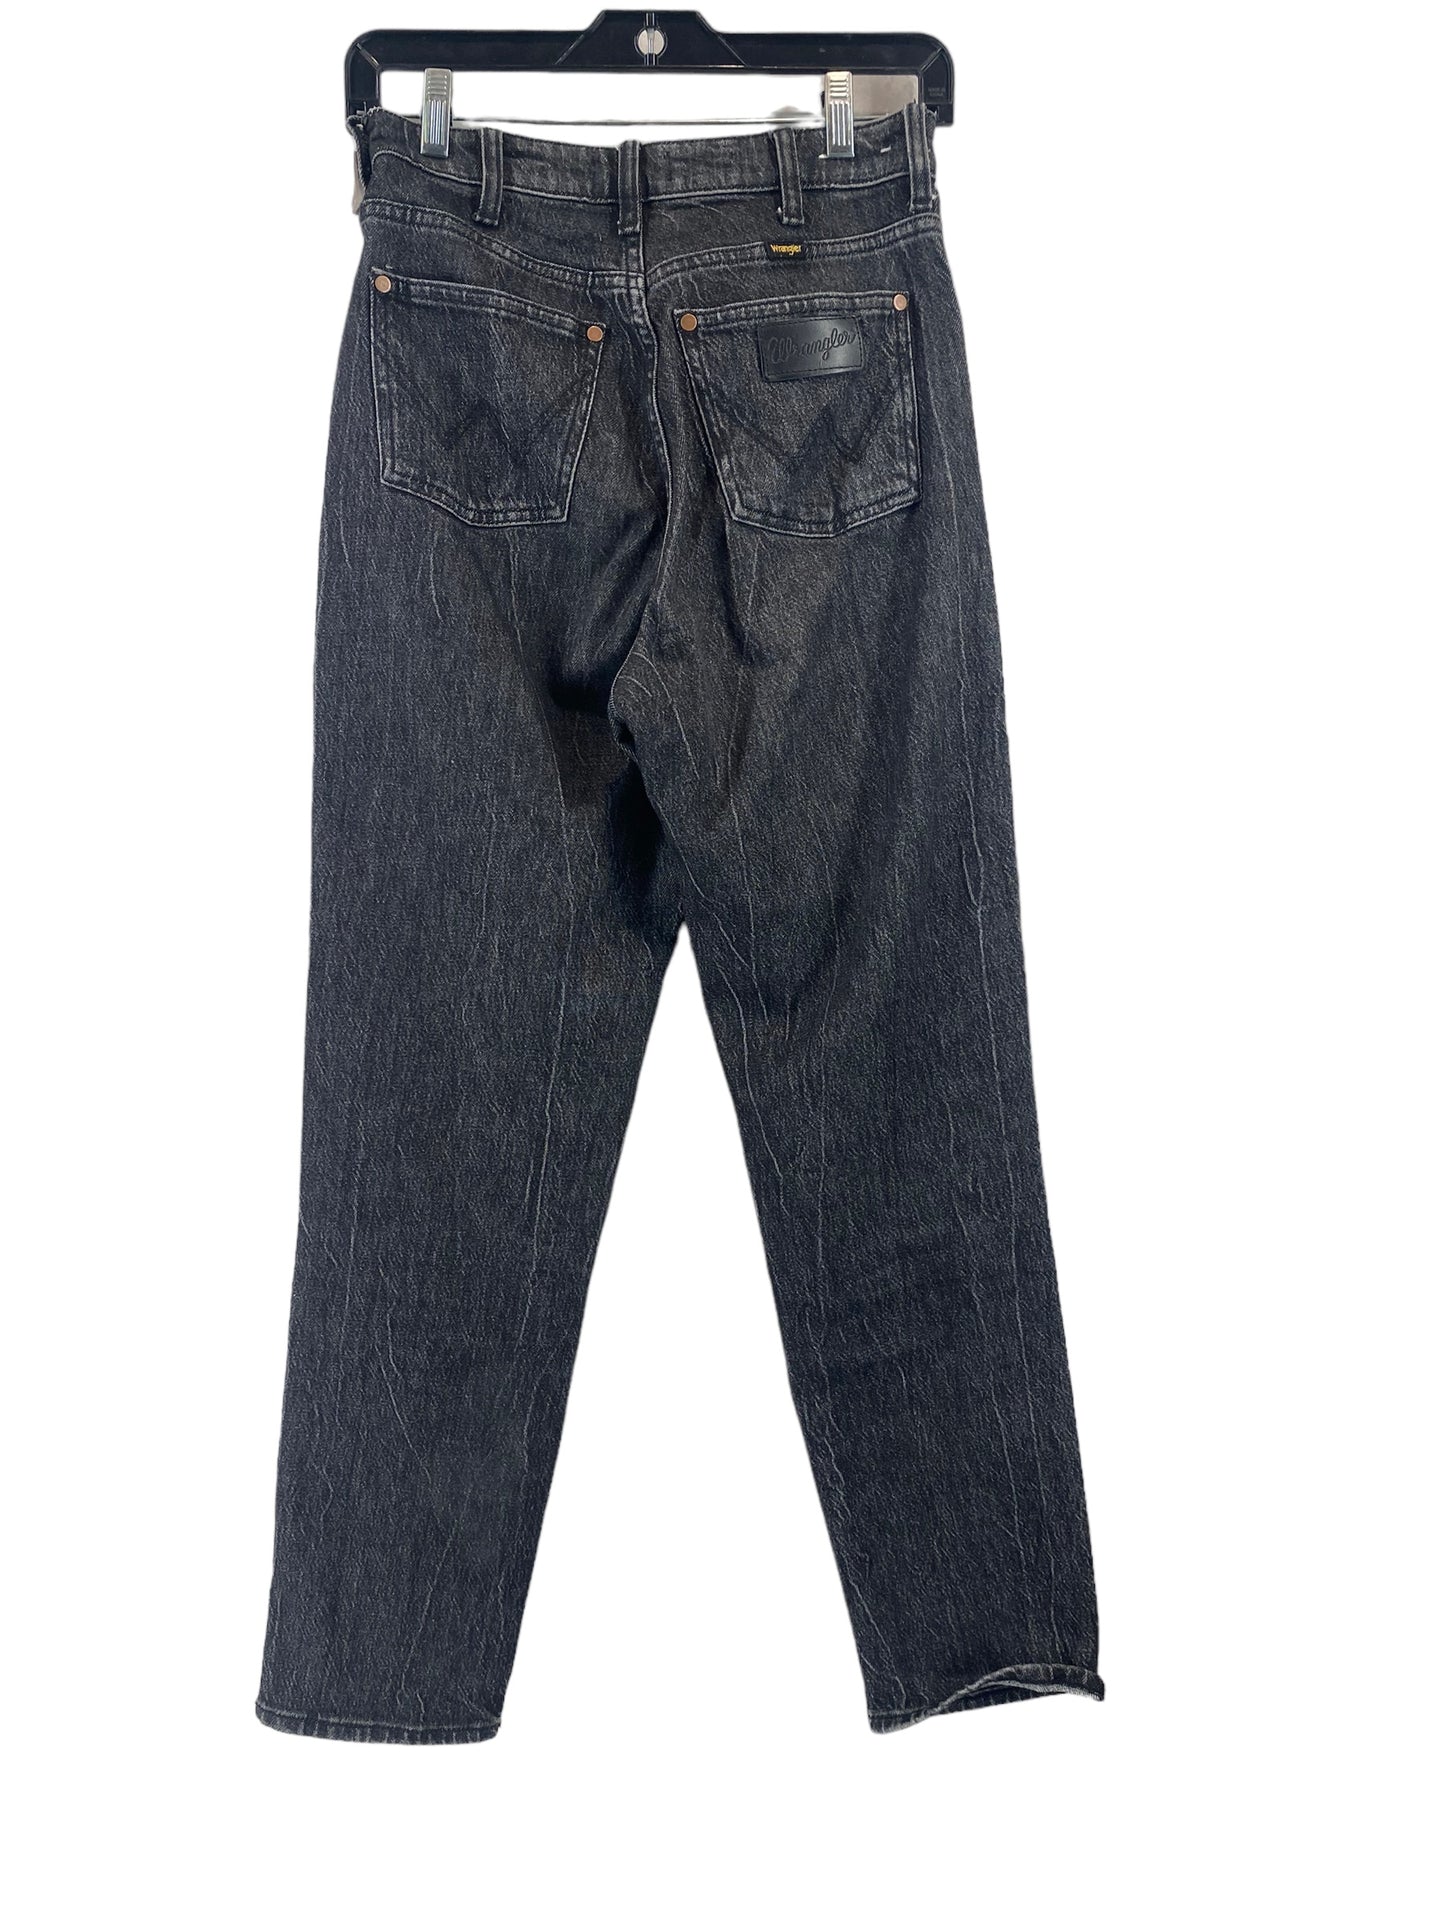 Jeans Skinny By Wrangler  Size: 27